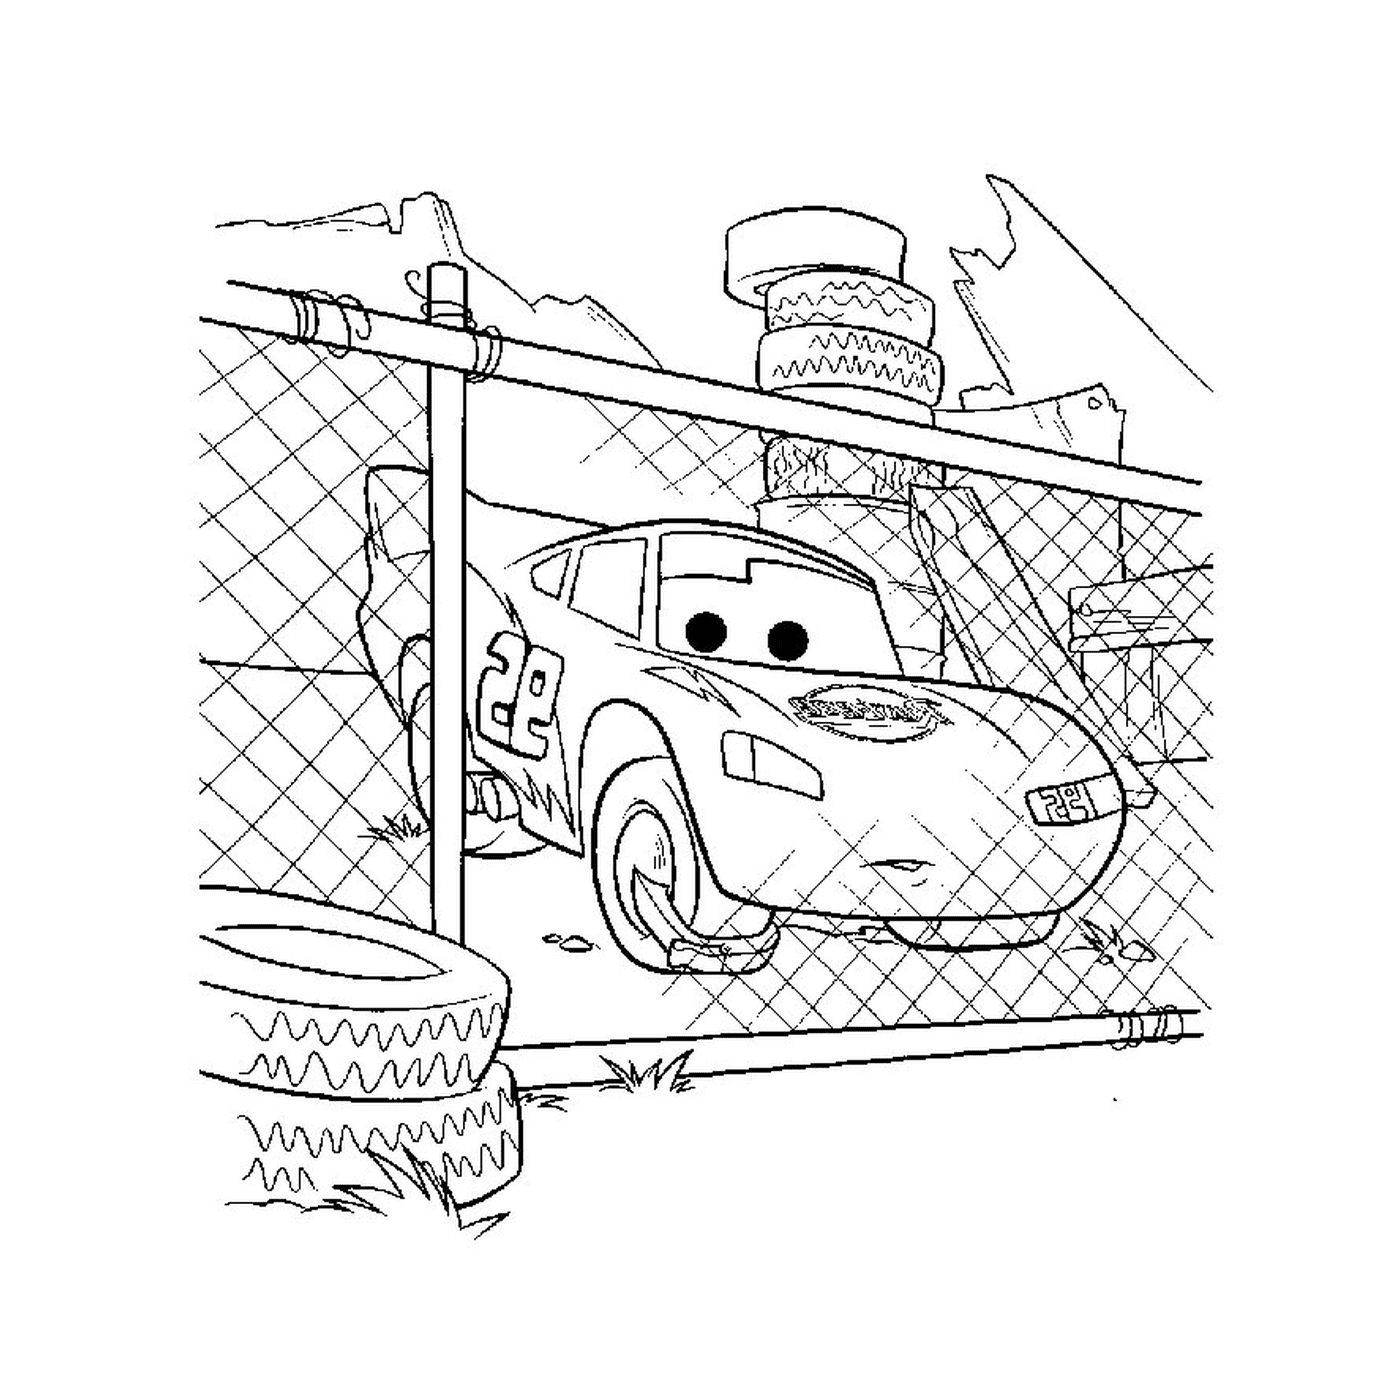  Un'auto in una zona recintata 